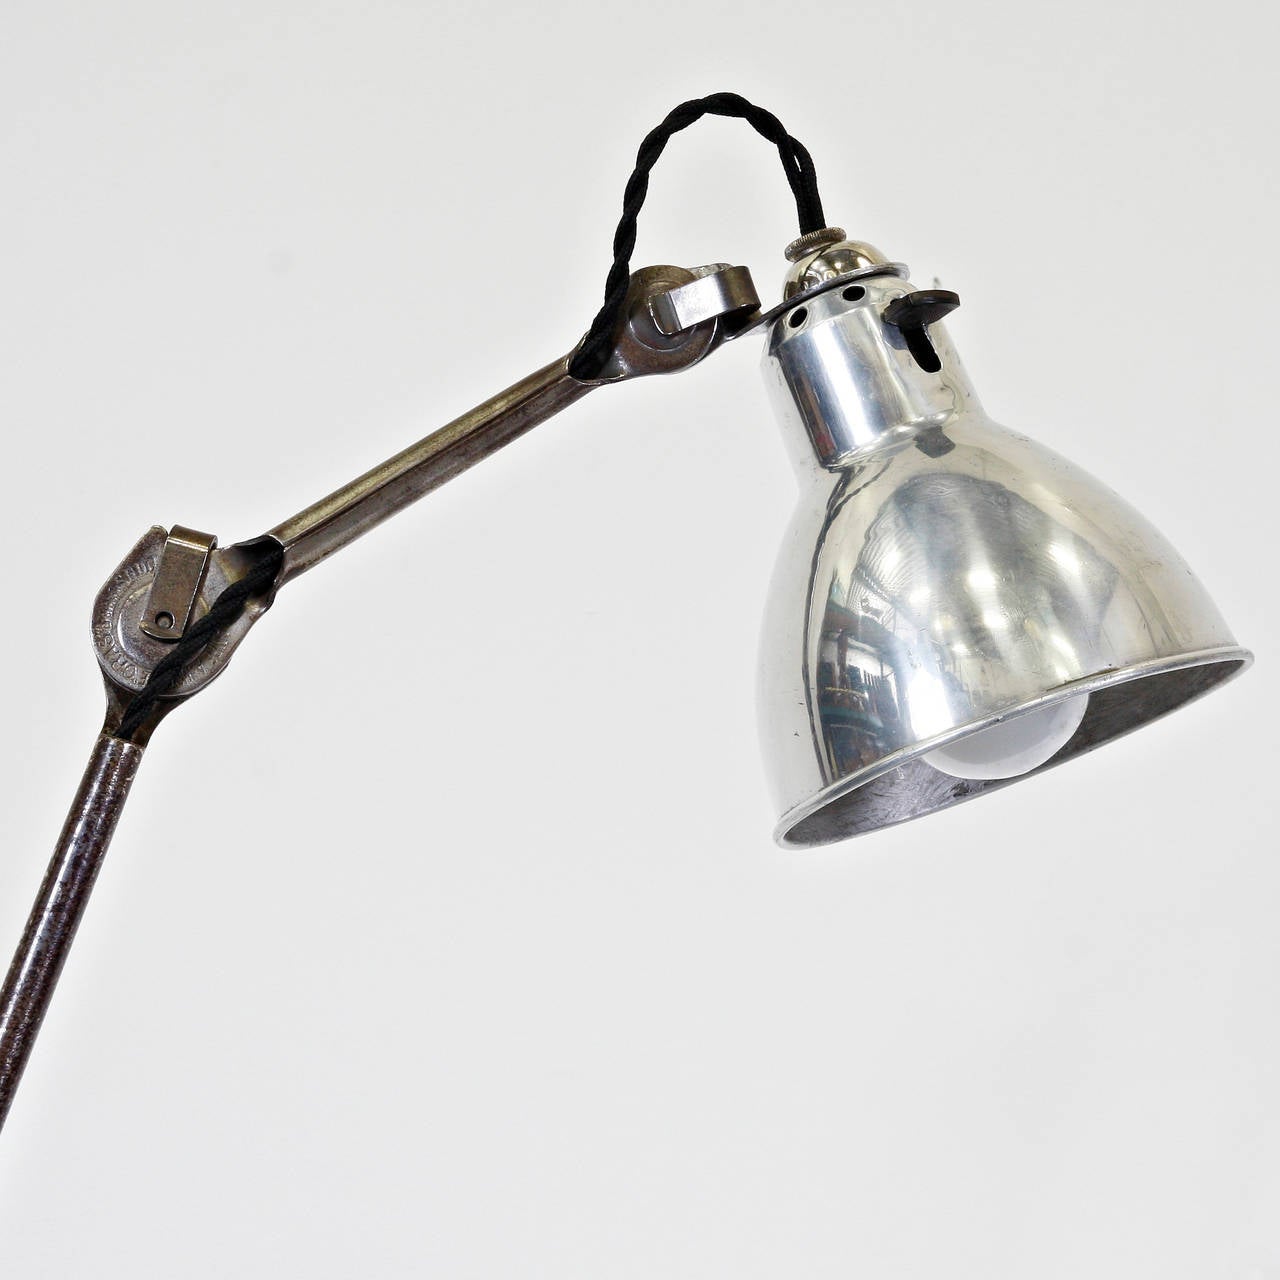 French Lampe Gras No. 201 Table Lamp, circa 1930